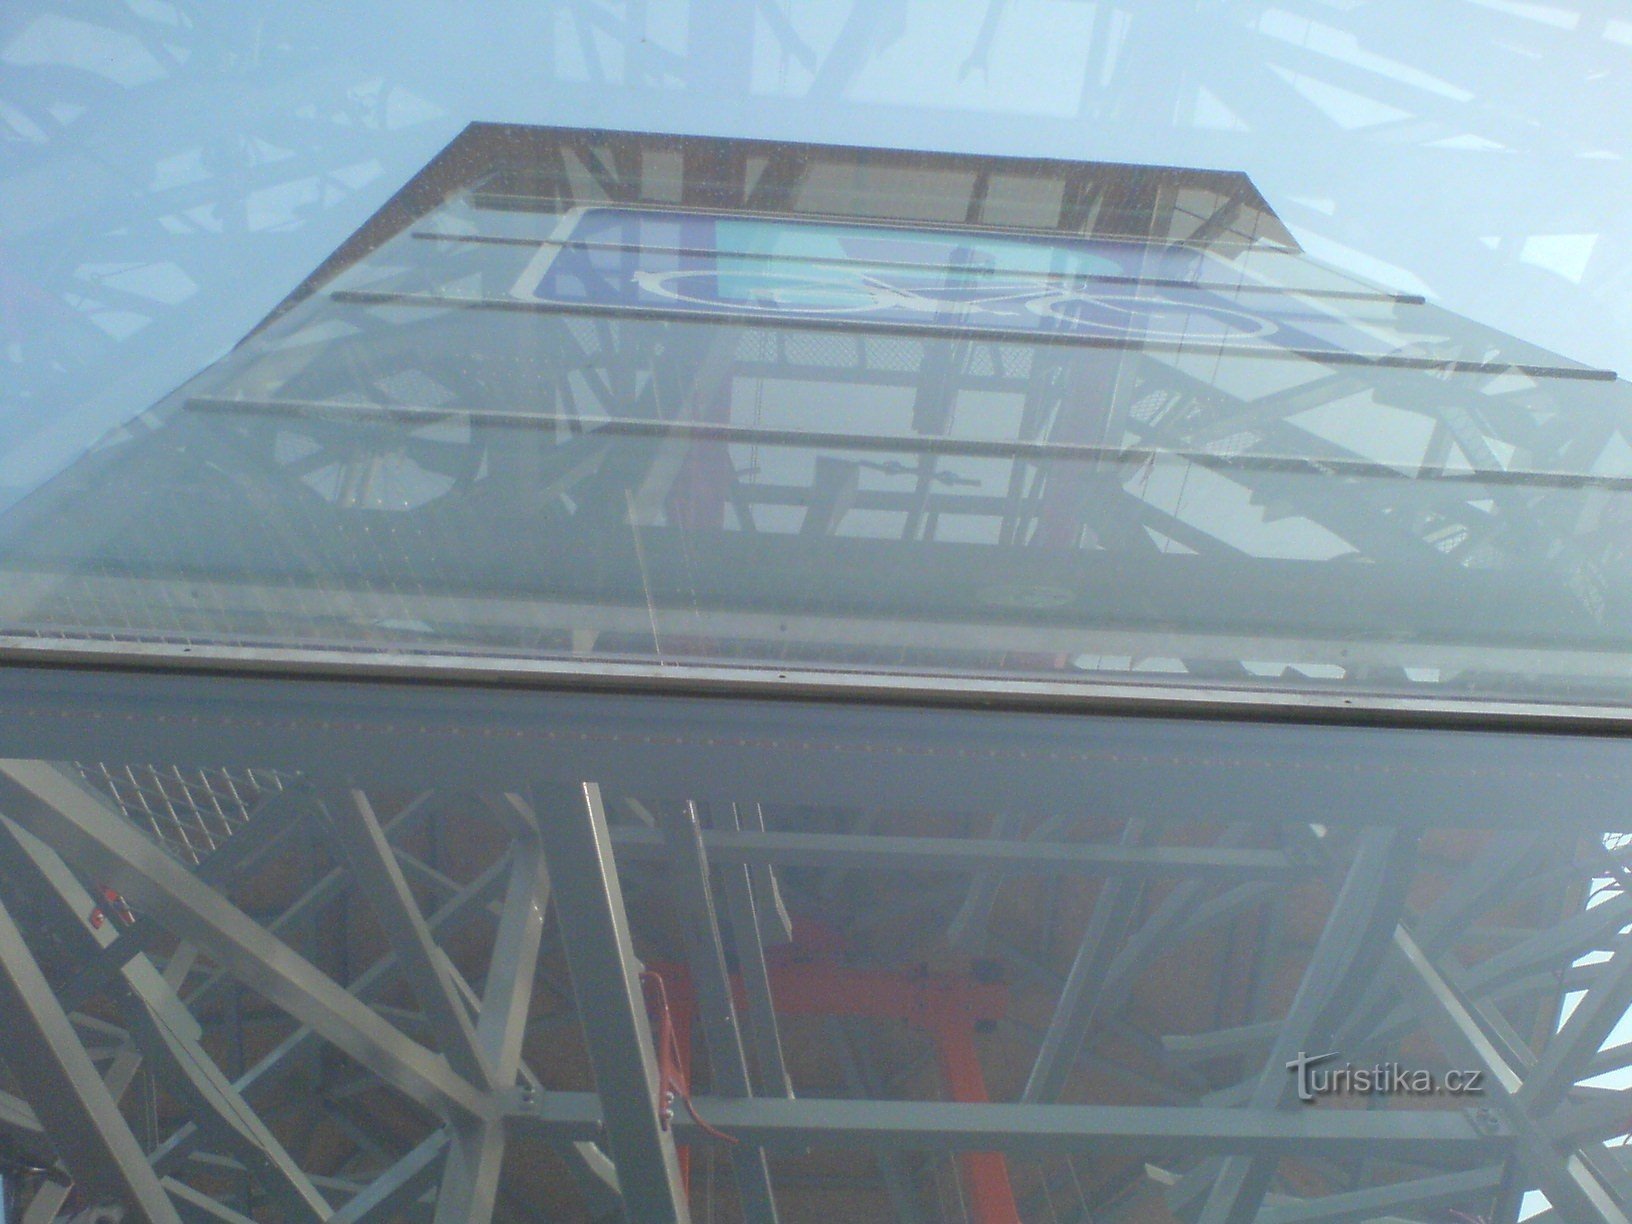 Вид через стекло конструкции гаража